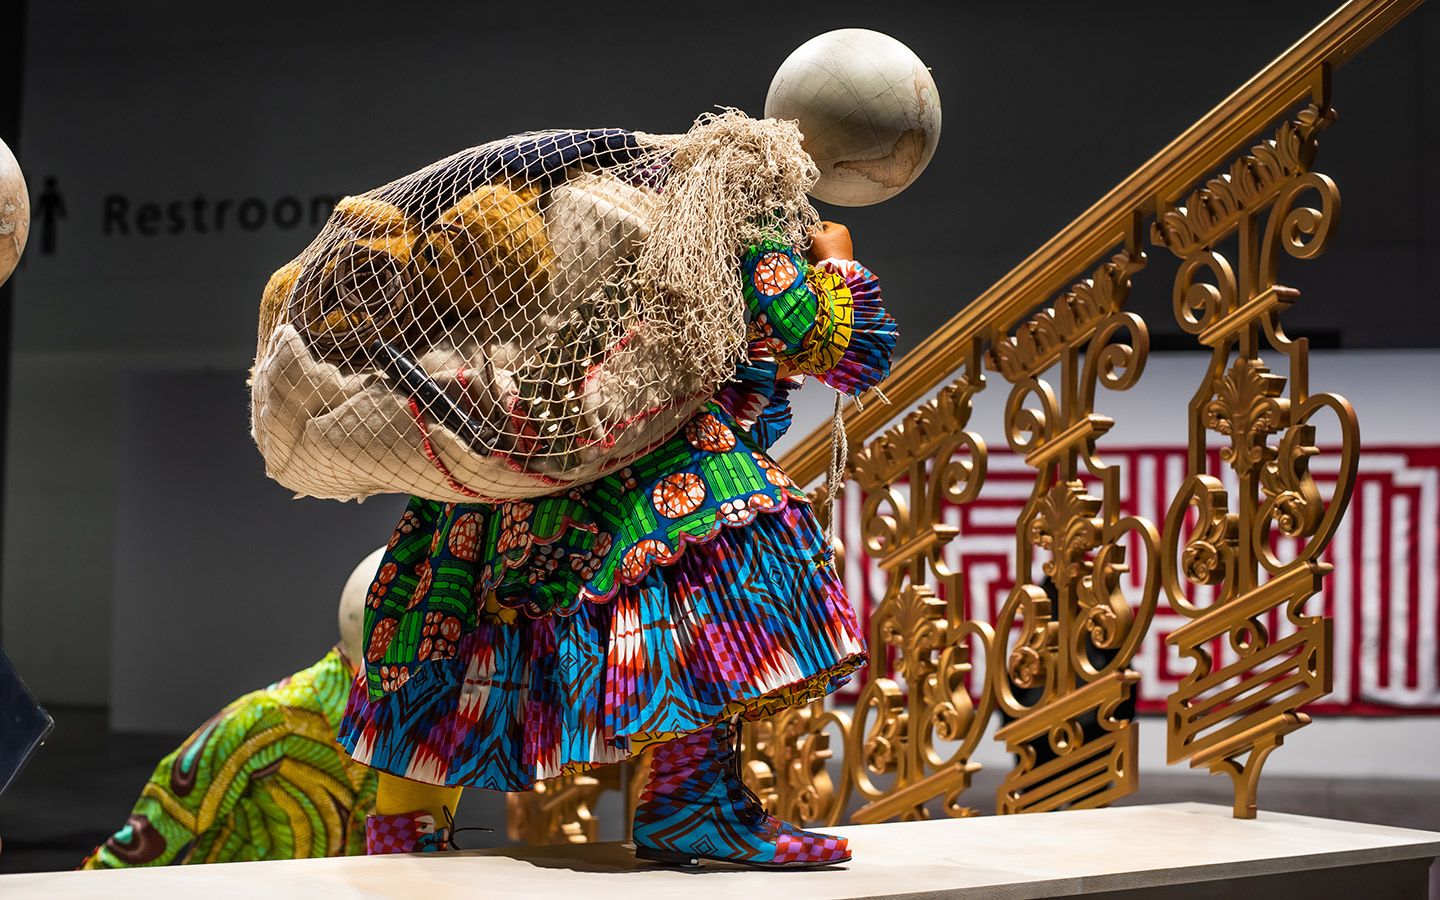 Escultura Moving Up de Yinka Shonibare de personas subiendo escaleras, cortesía de Art Basel